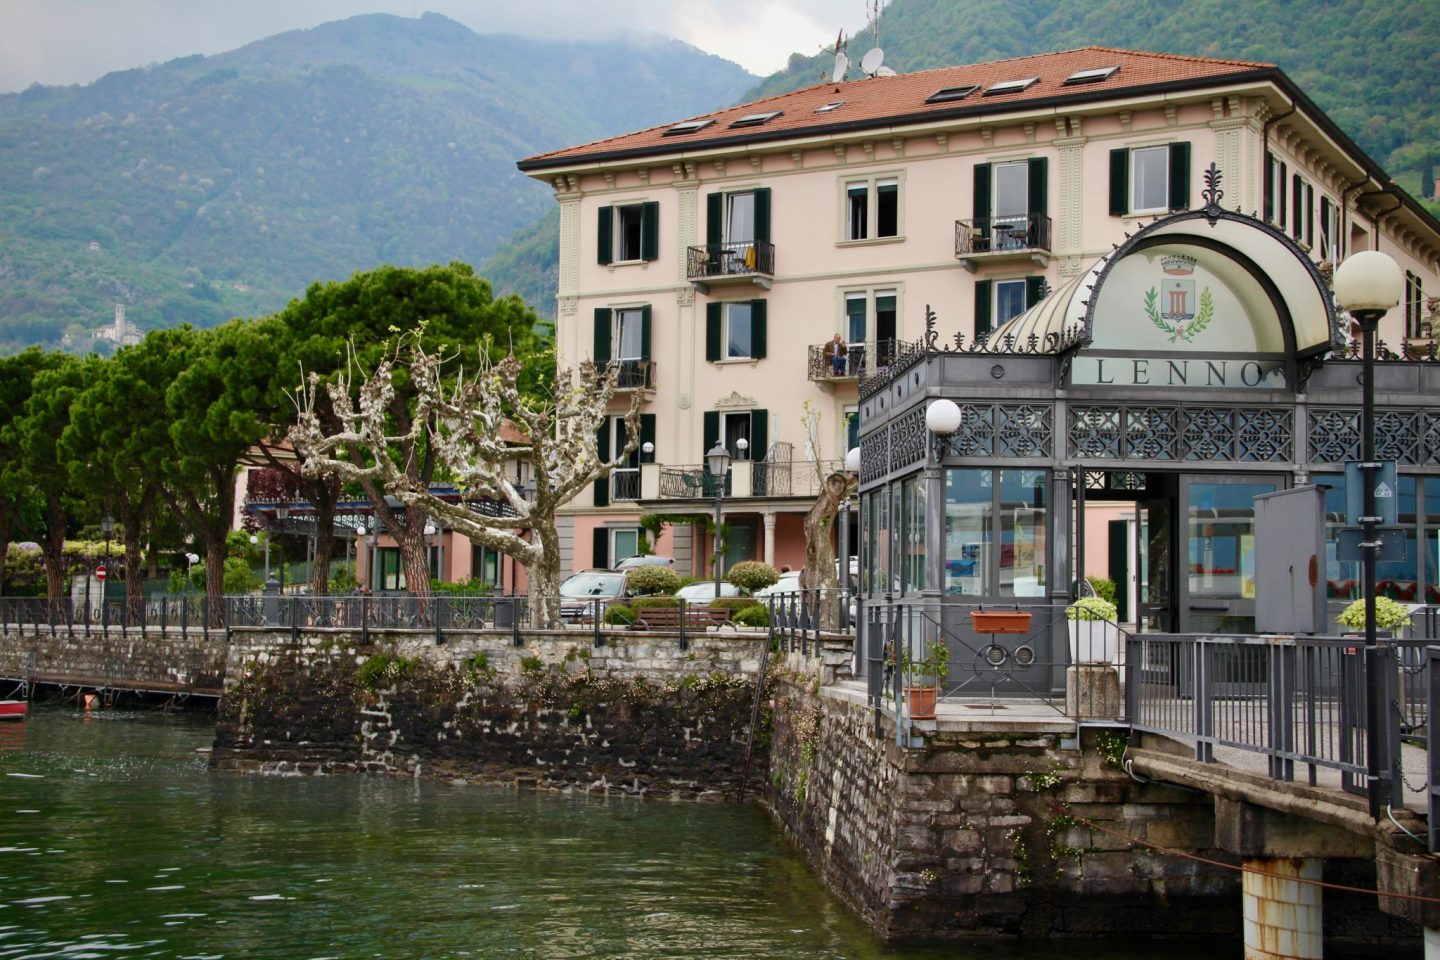 What to do in Lake Como ... Lenno Dock, Lake Como Italy ... The Spectacular Adventurer